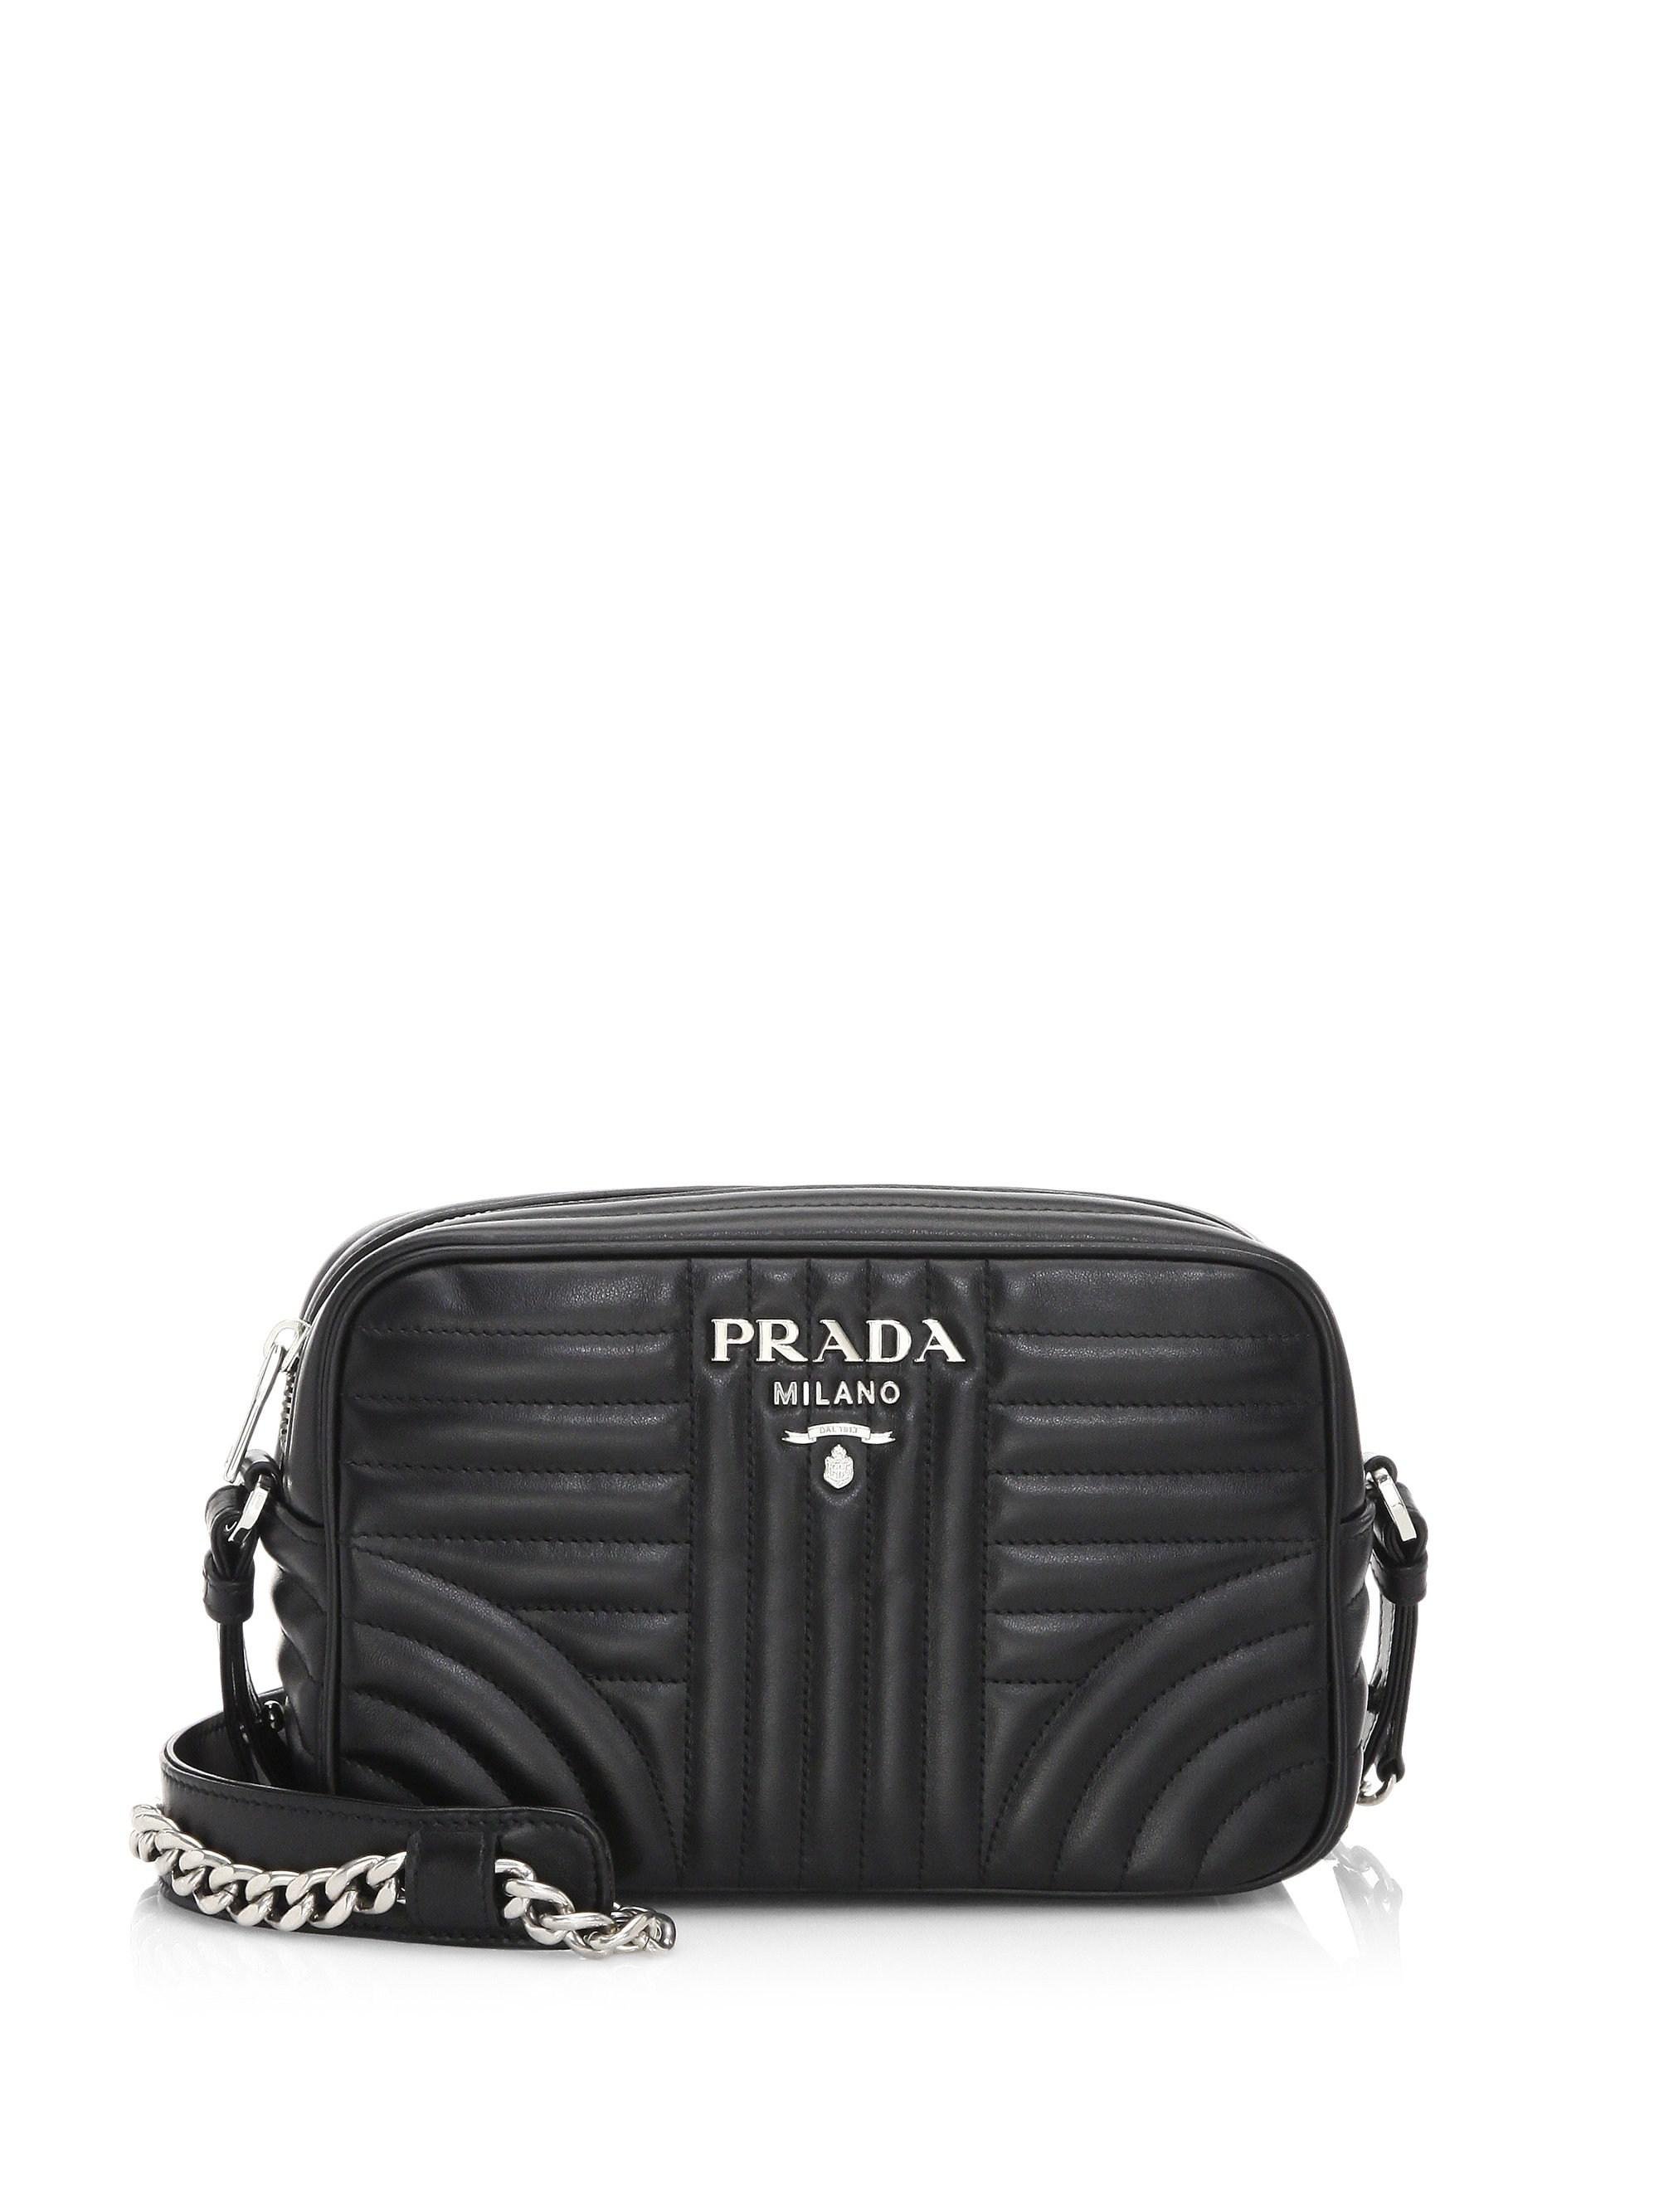 Prada Leather Diagramme Camera Bag in Black | Lyst